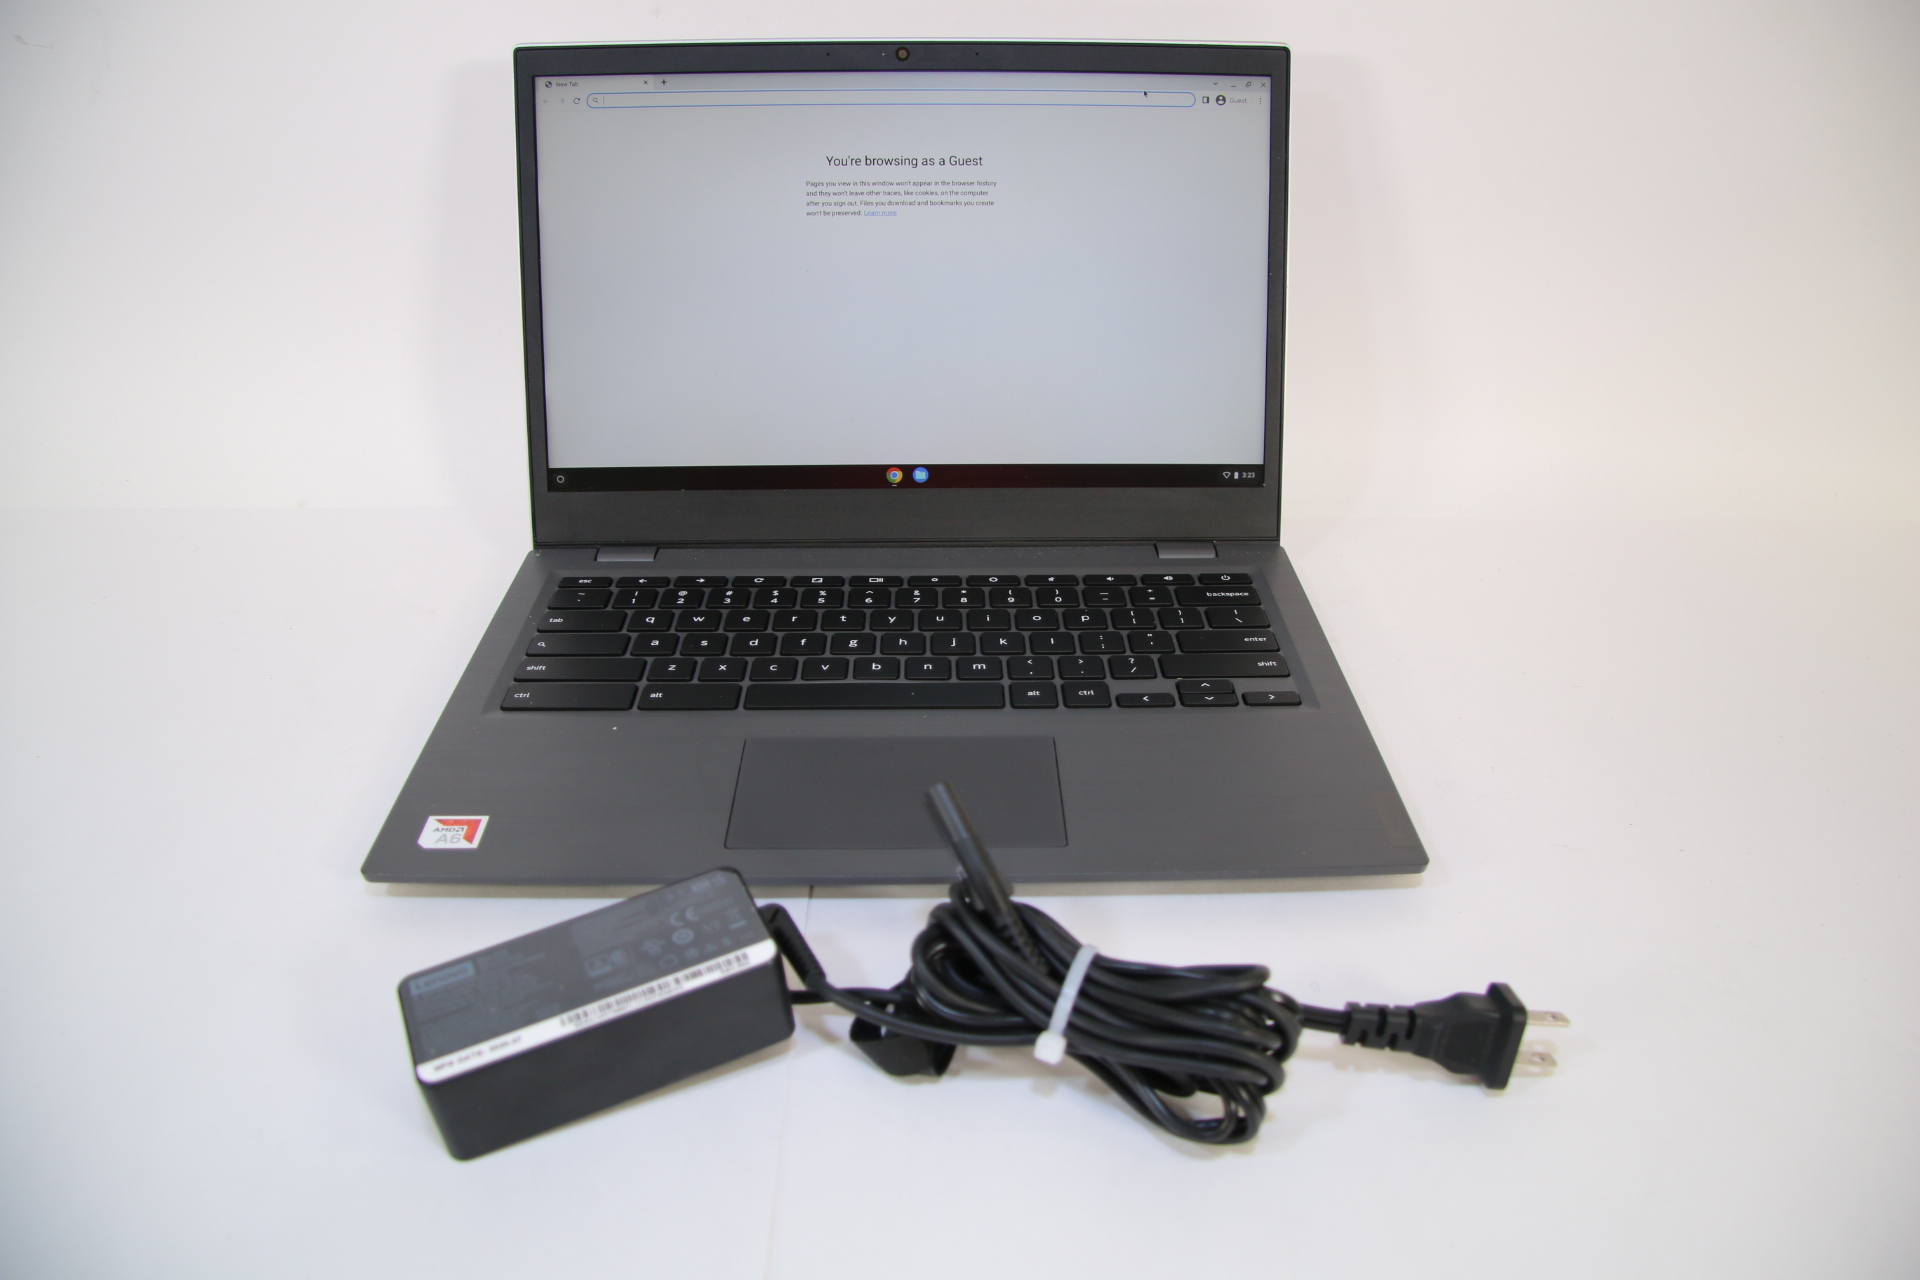 Lenovo Chromebook S345-14”, Slim & Fast Chromebook